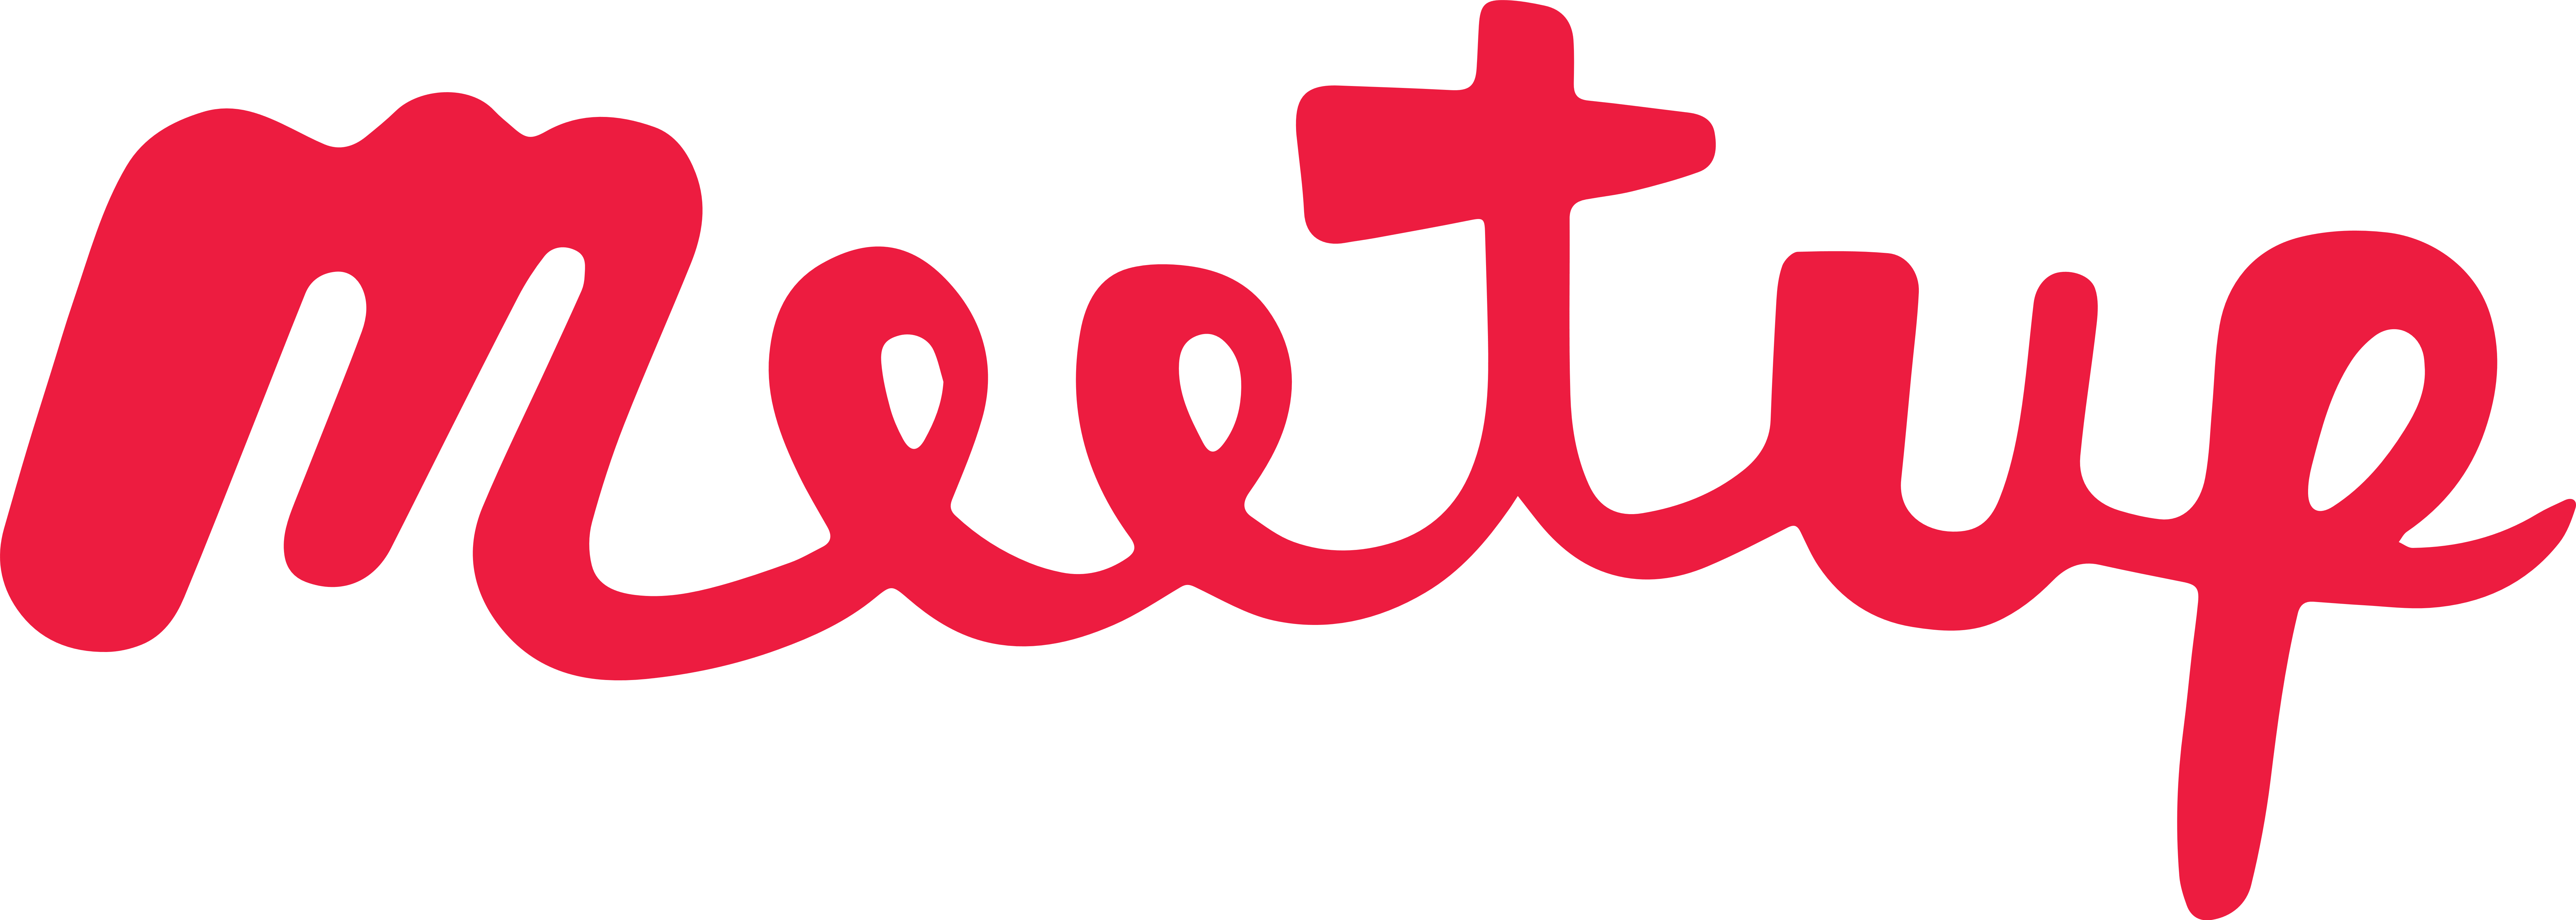 Meetup – Logos Download